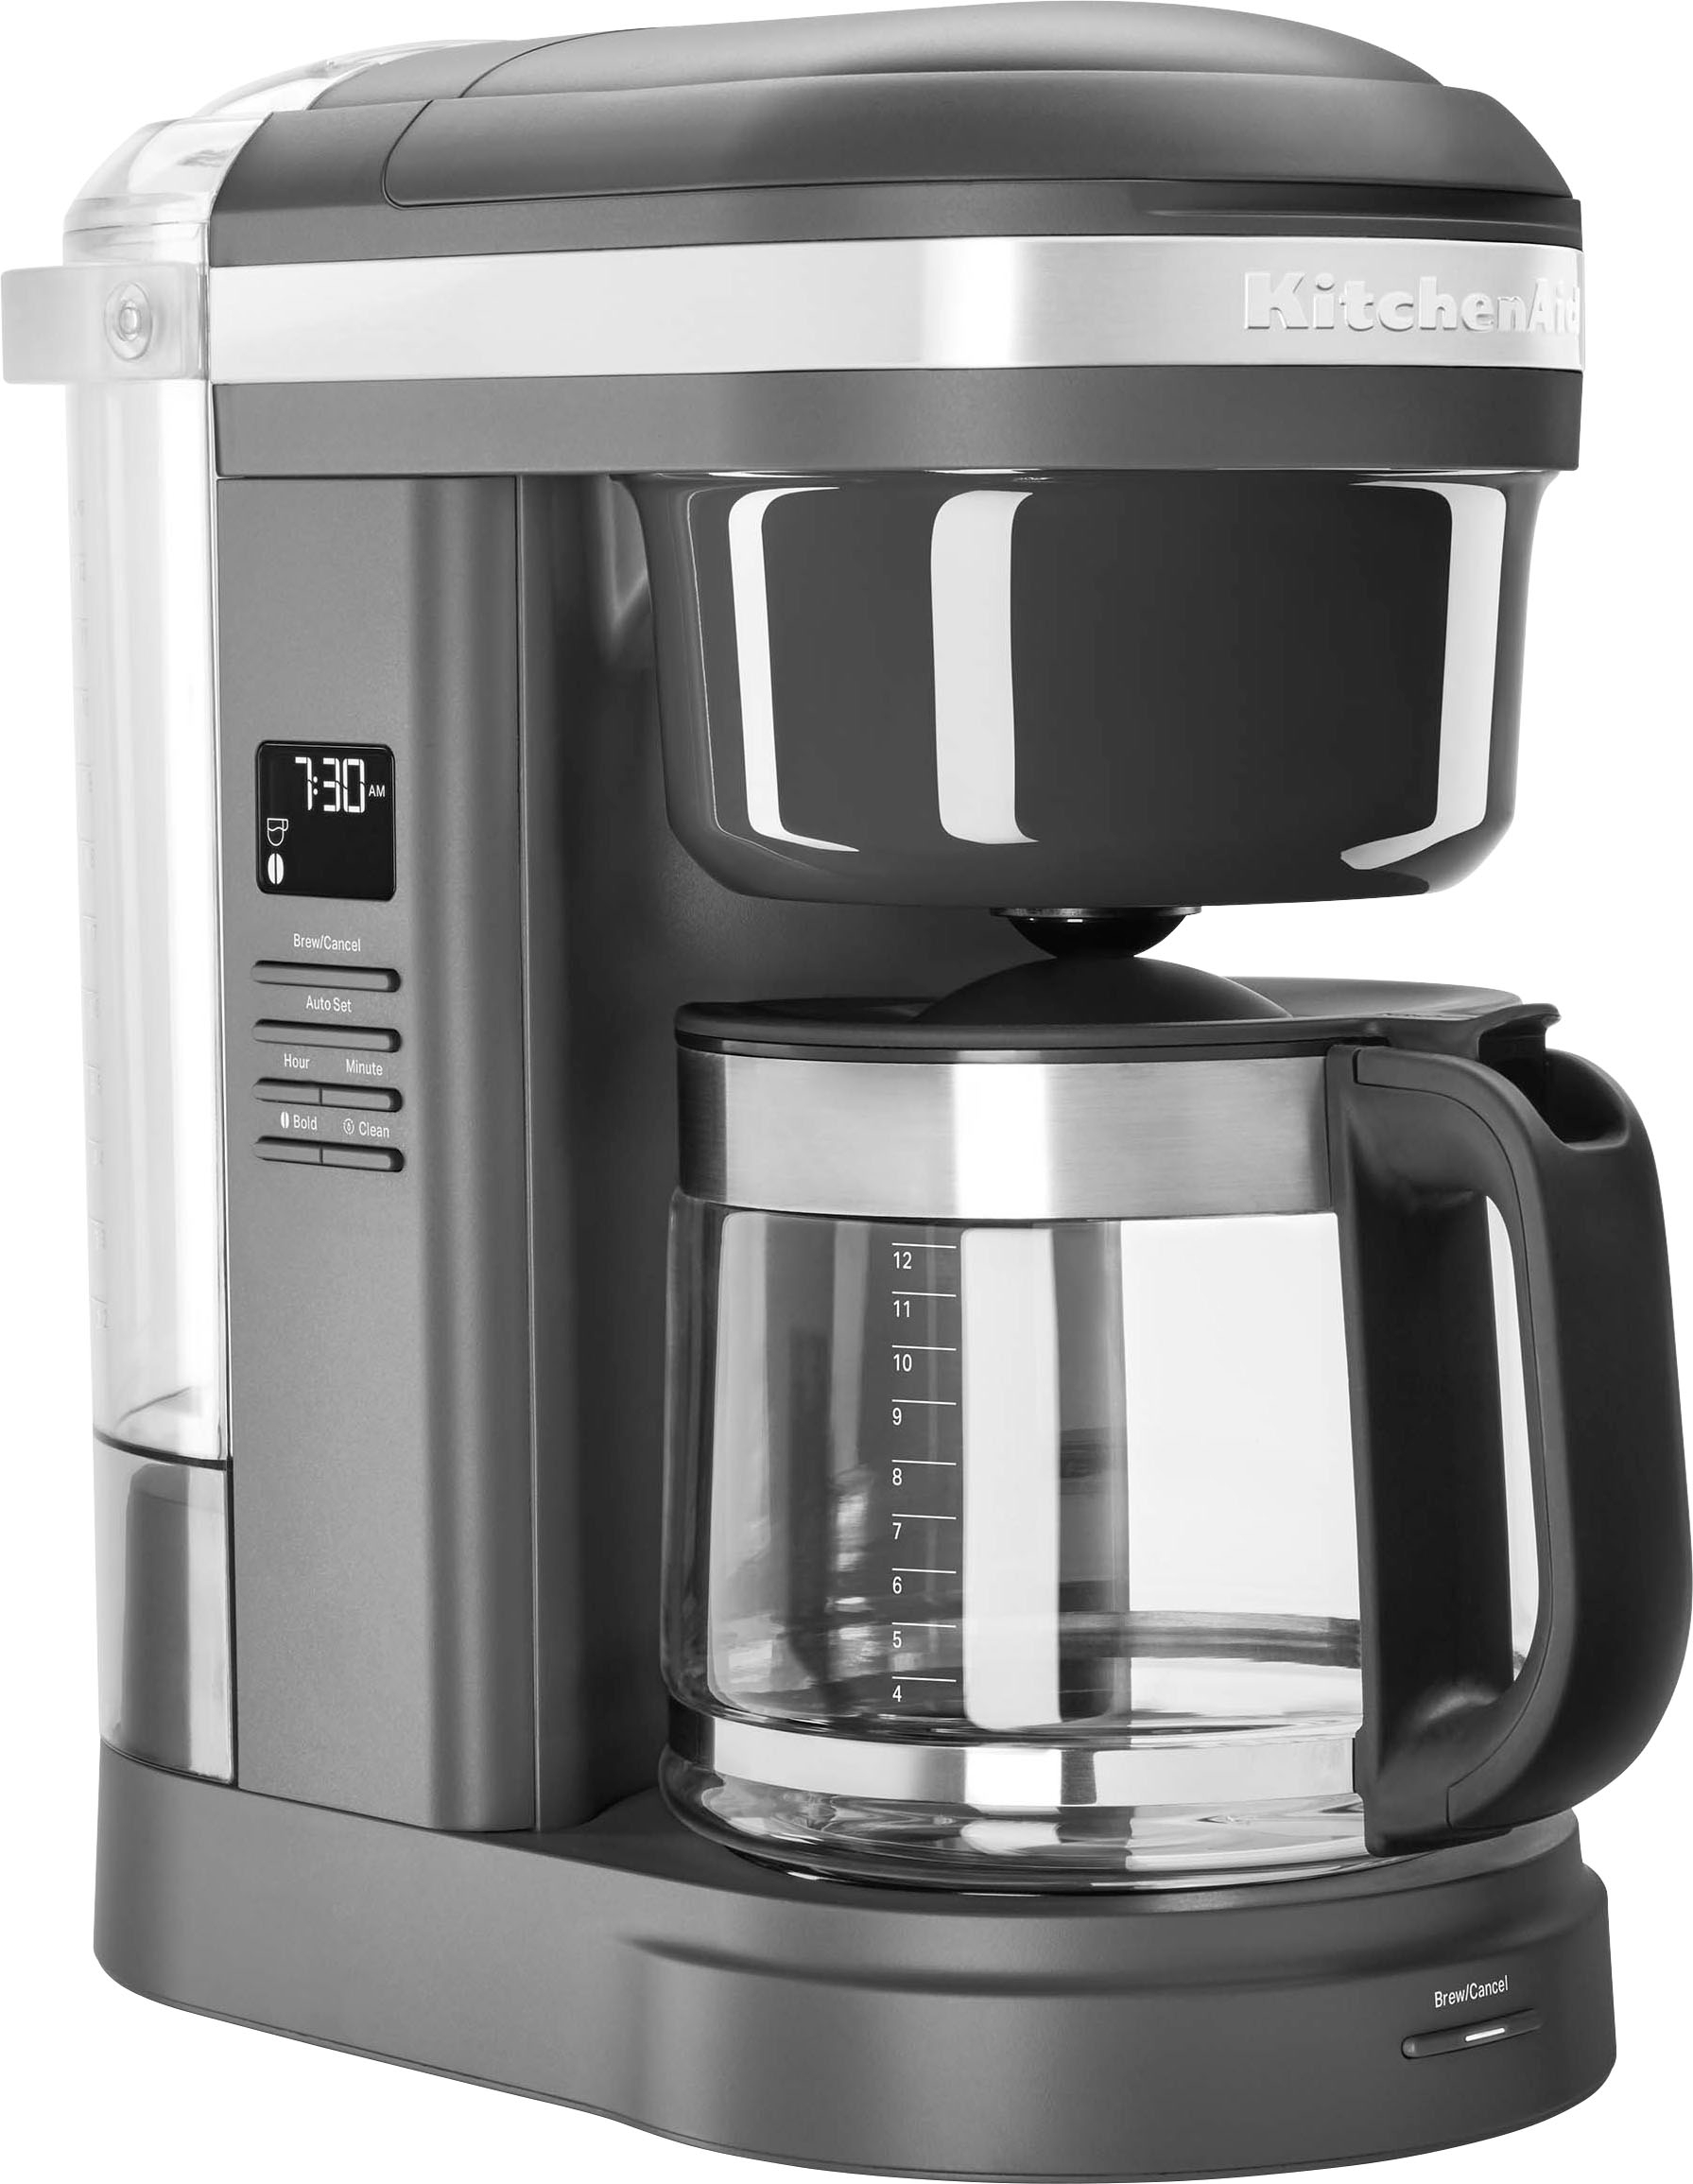 KitchenAid KCM1208DG 12-Cup Coffee Maker